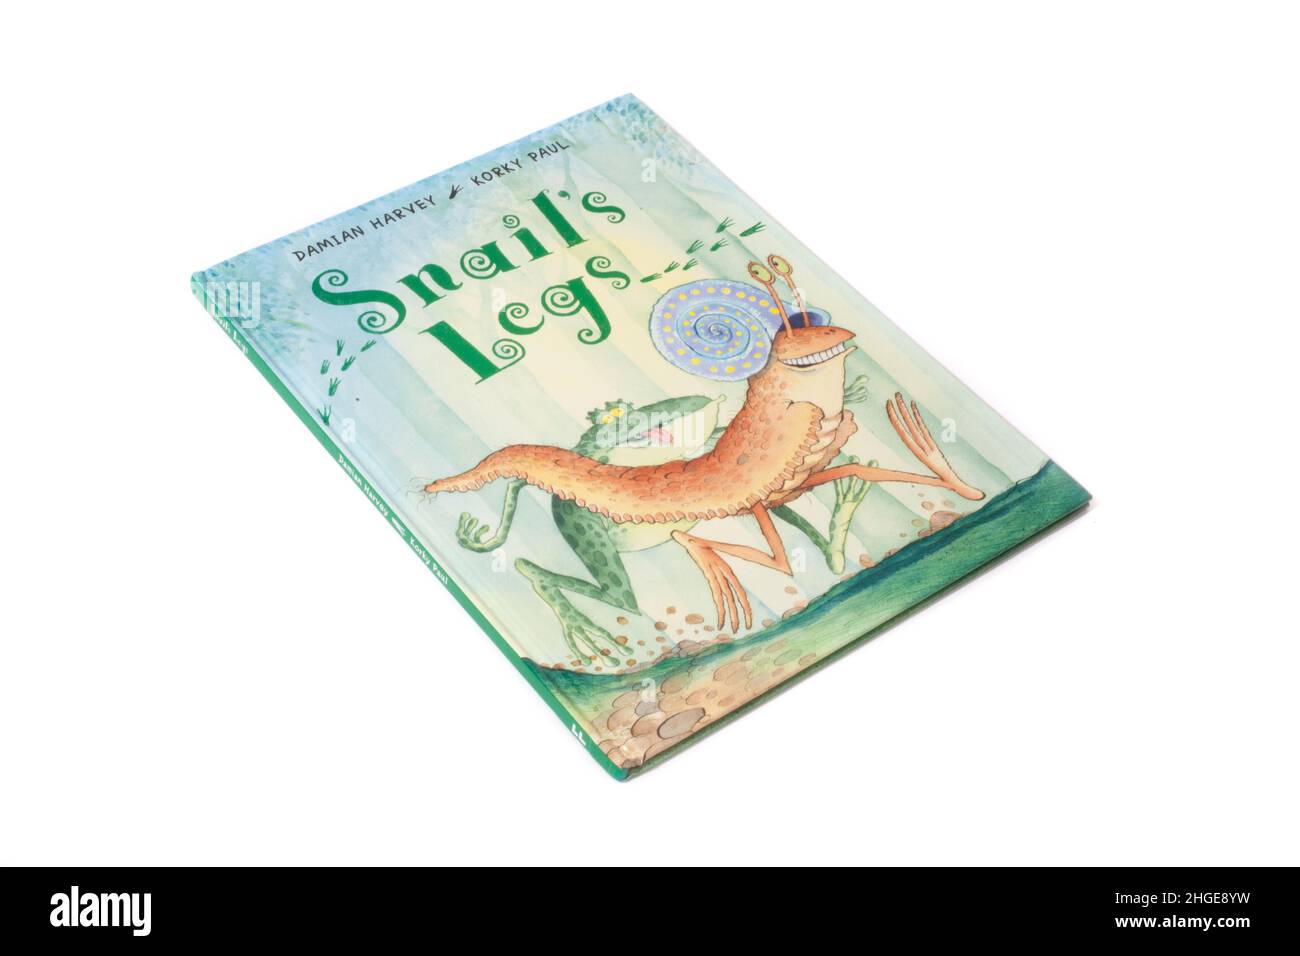 Das Buch, Snail's Legs von Damian Harvey und Korky Paul Stockfoto